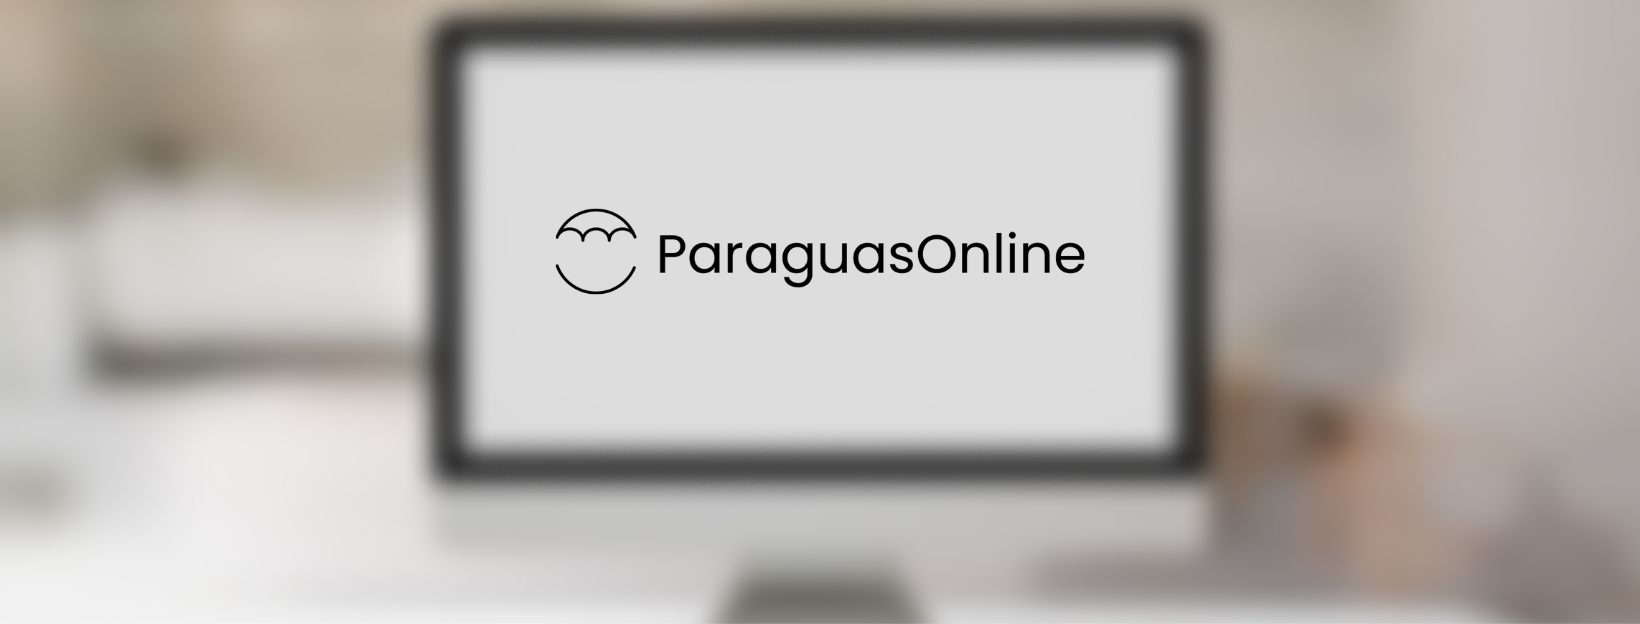 Remake página web ParaguasOnline